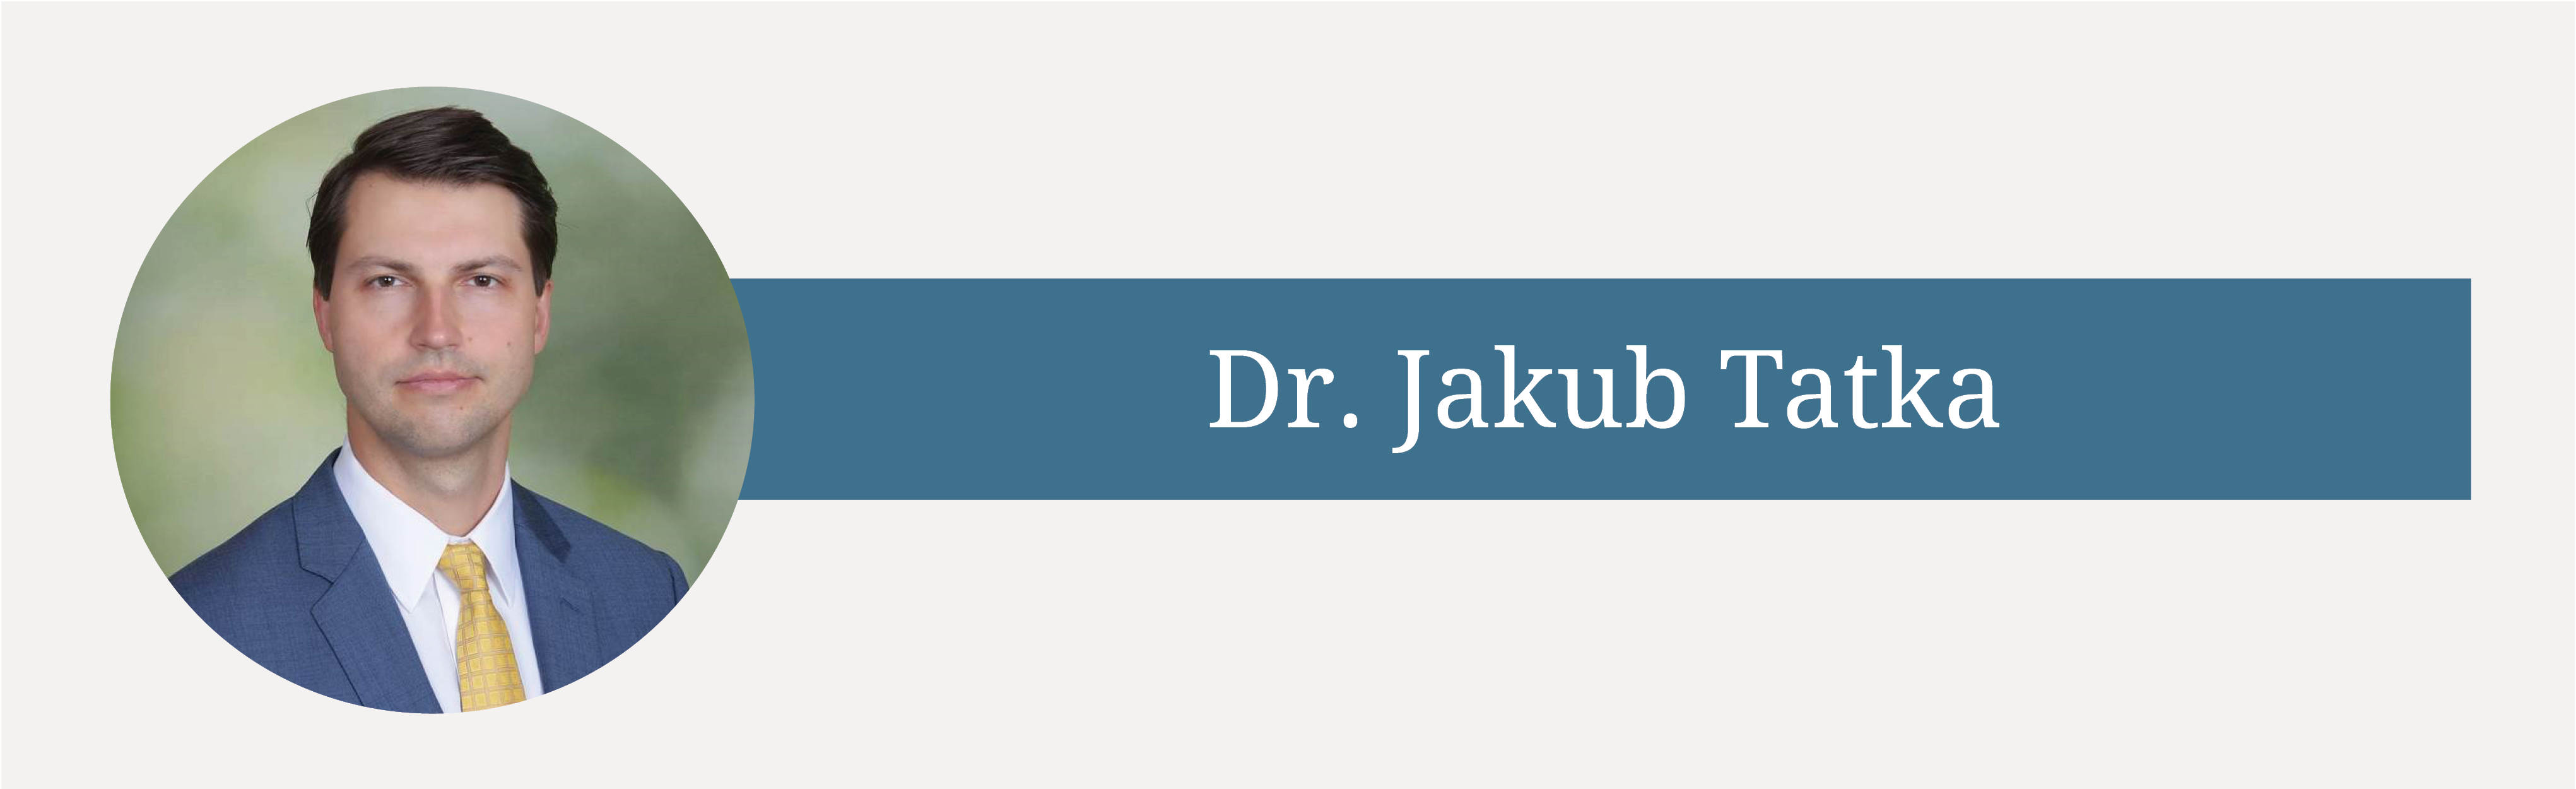 Jakub Tatka, MD, Joins White Plains Hospital Physician Associates